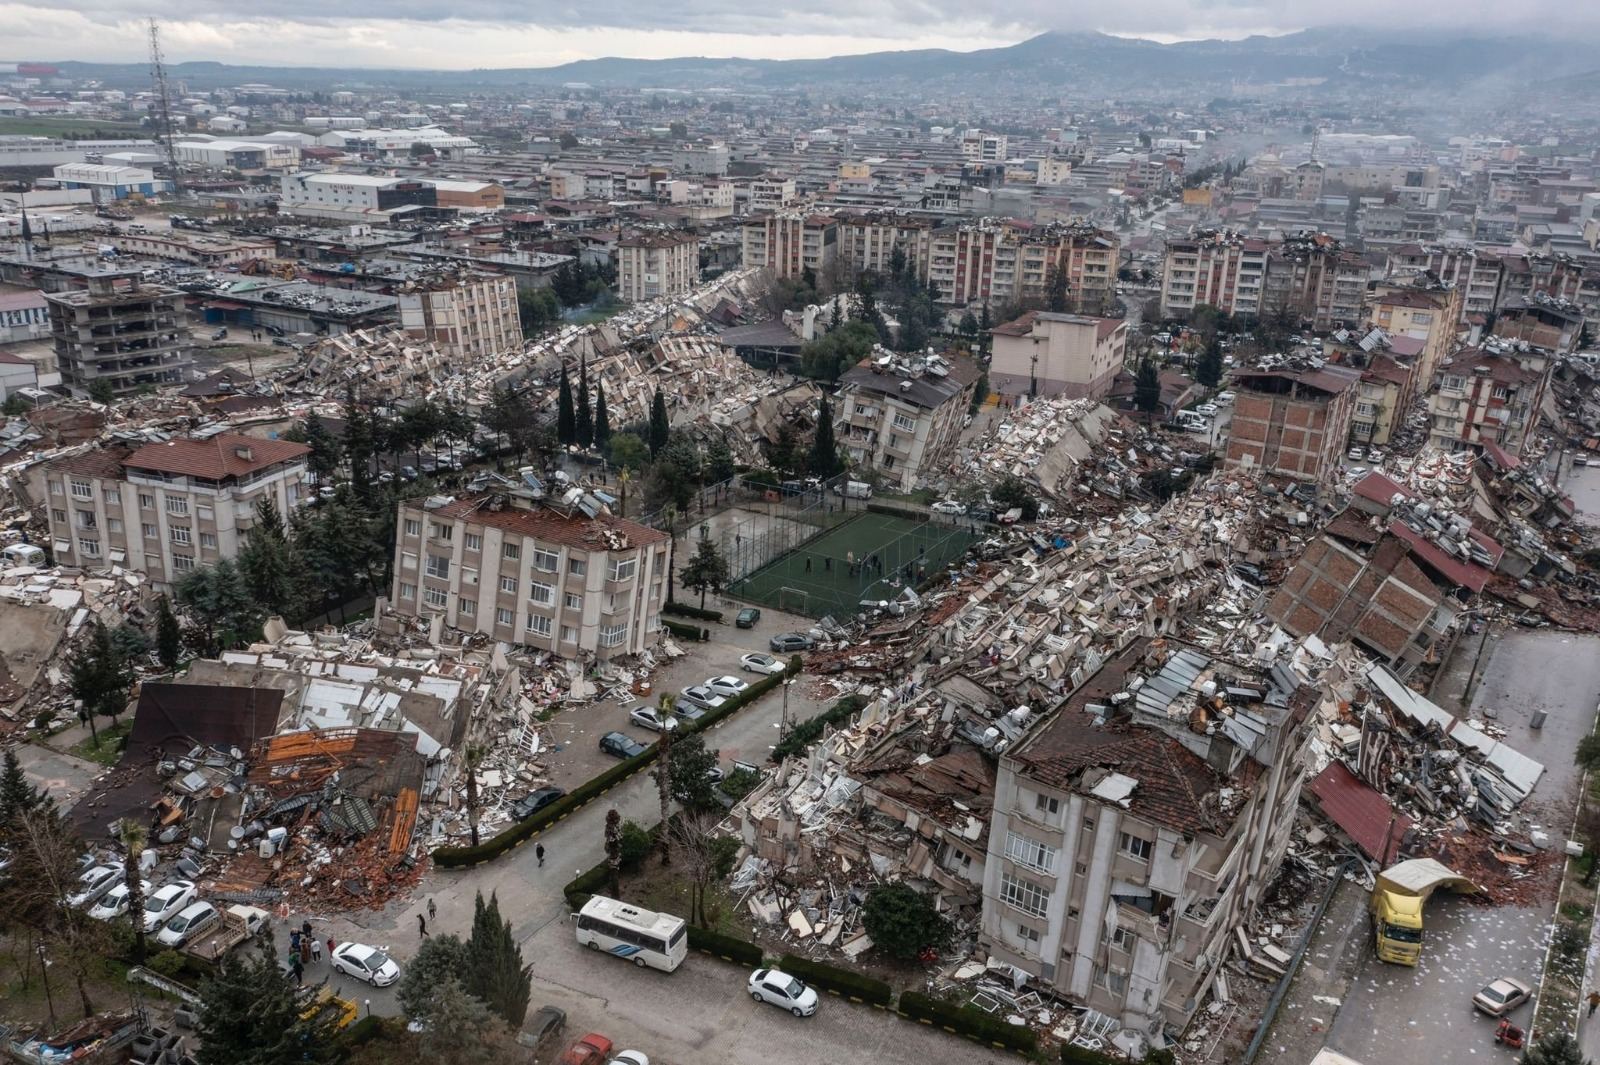 Türkiye earthquake death toll reaches 6,234